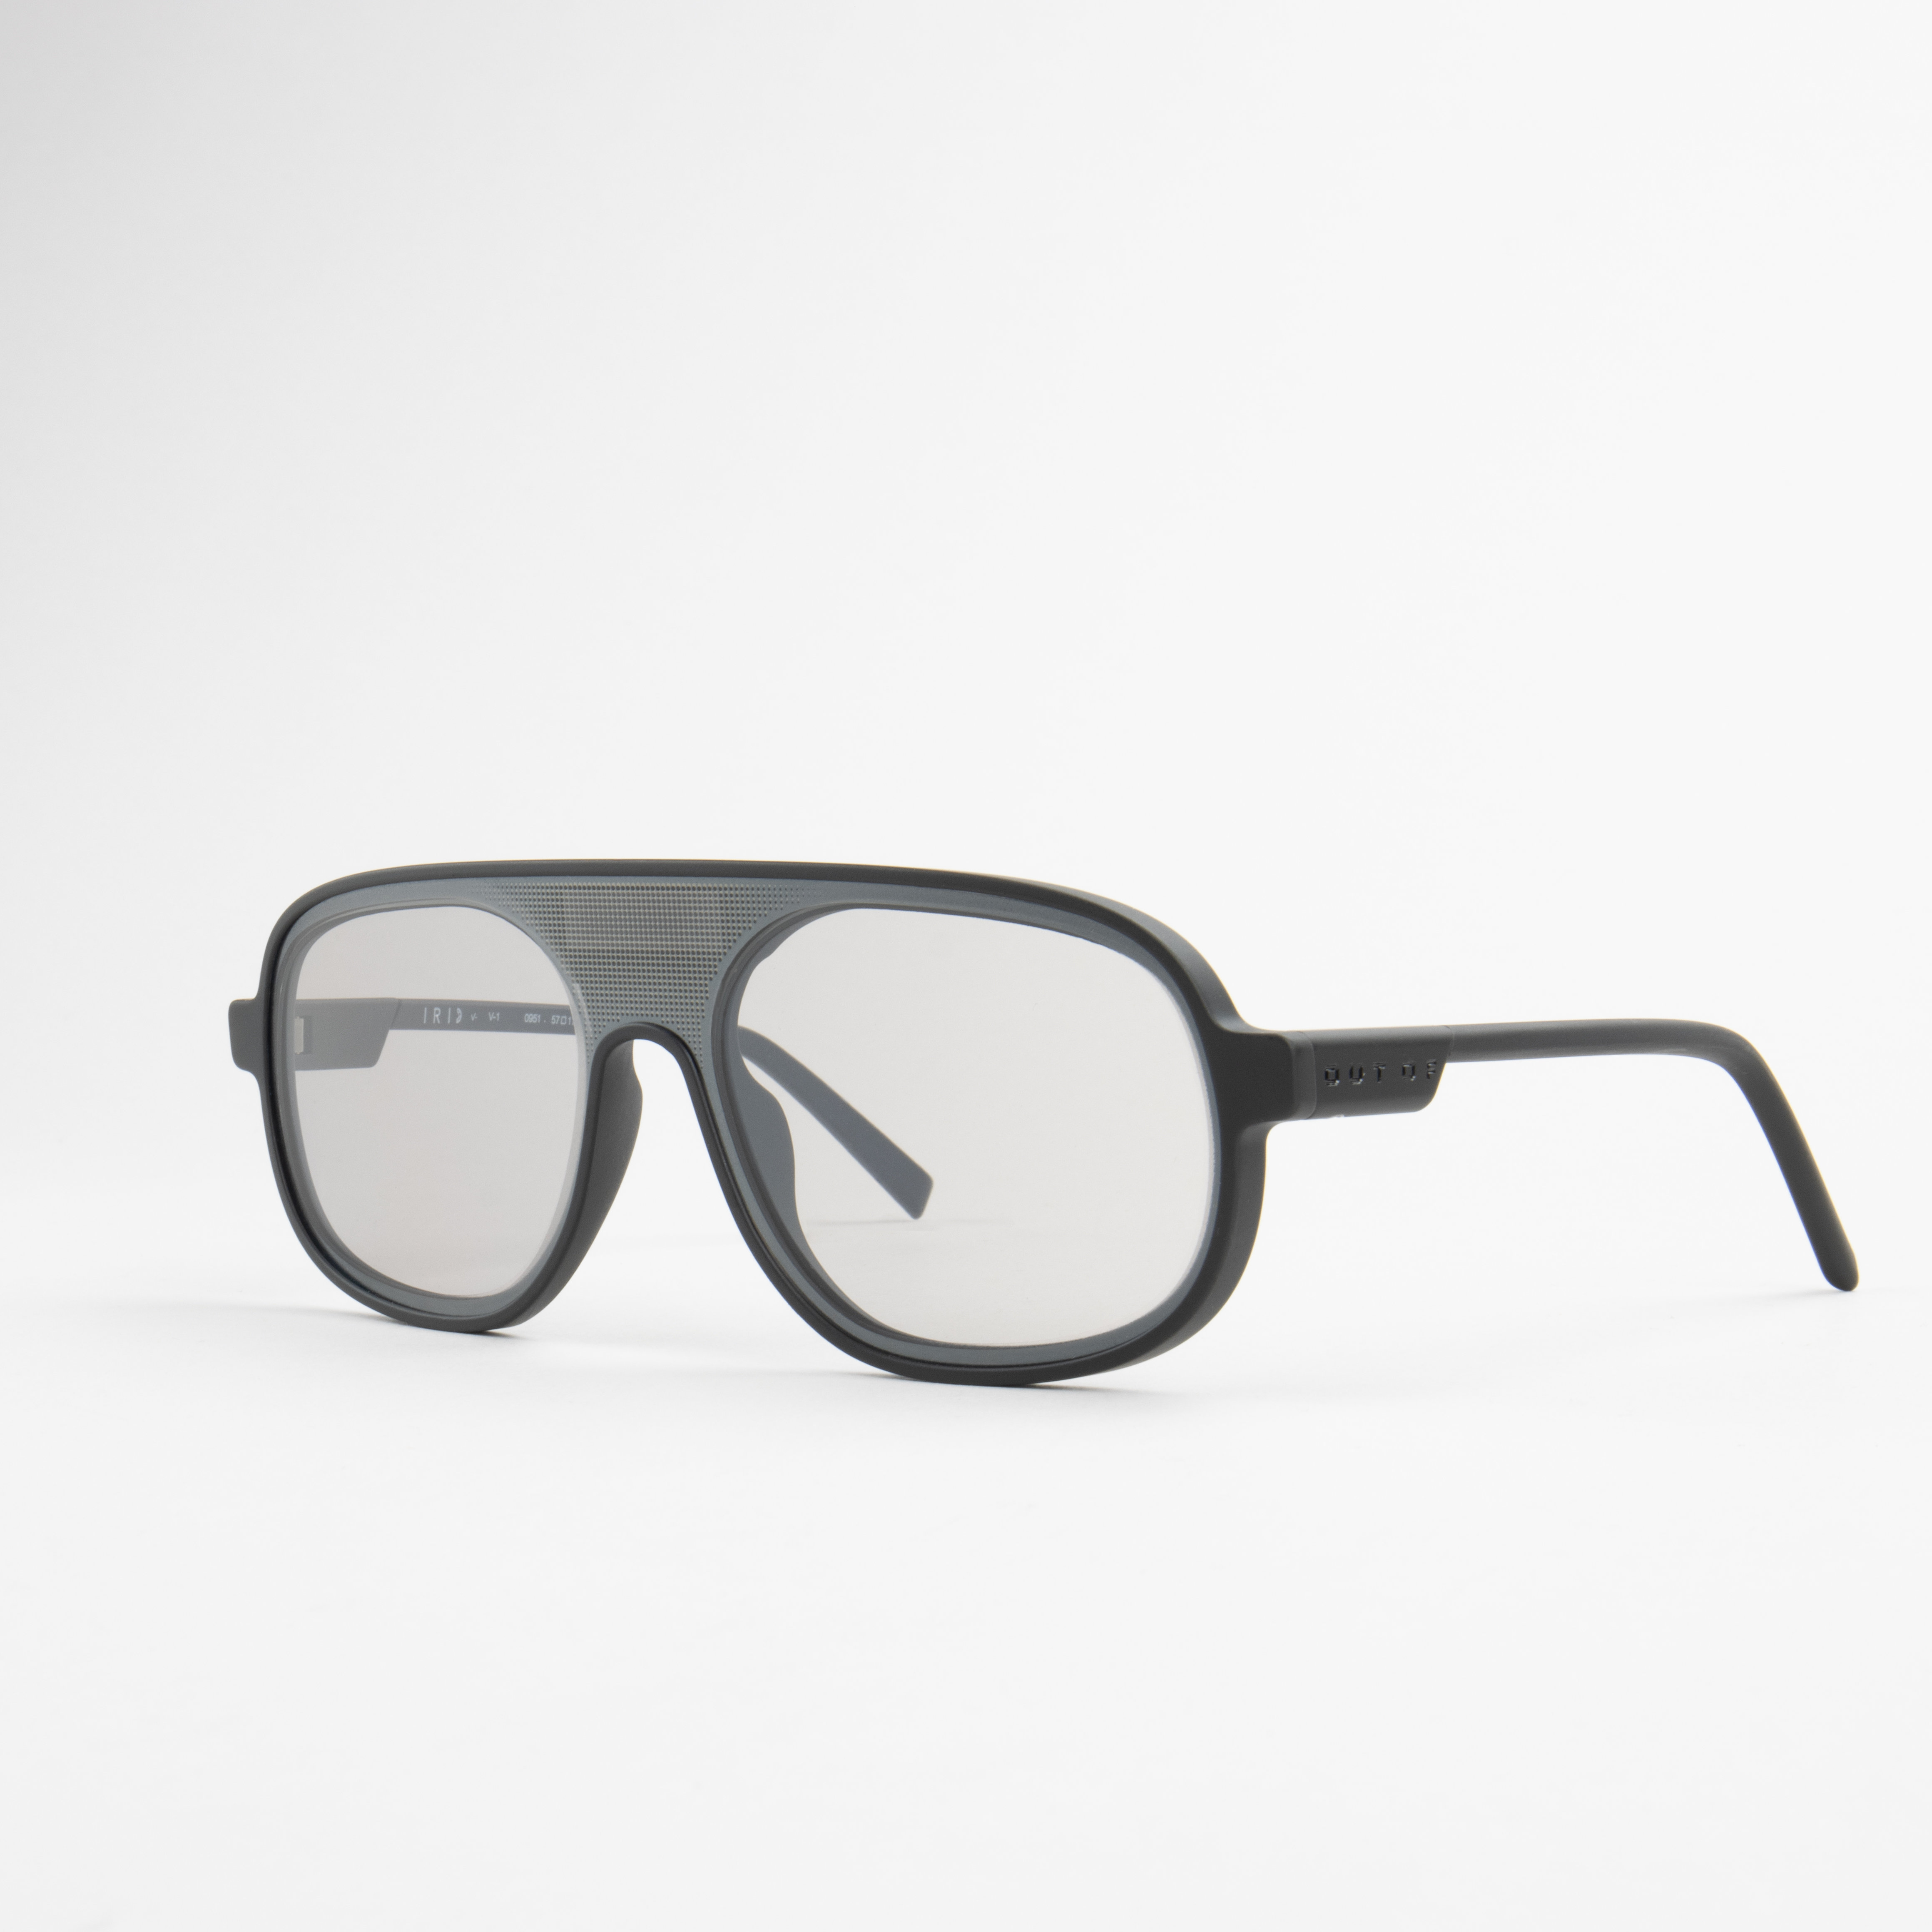 V-1 sunglasses with IRID X-10 lens color: Matt black/black